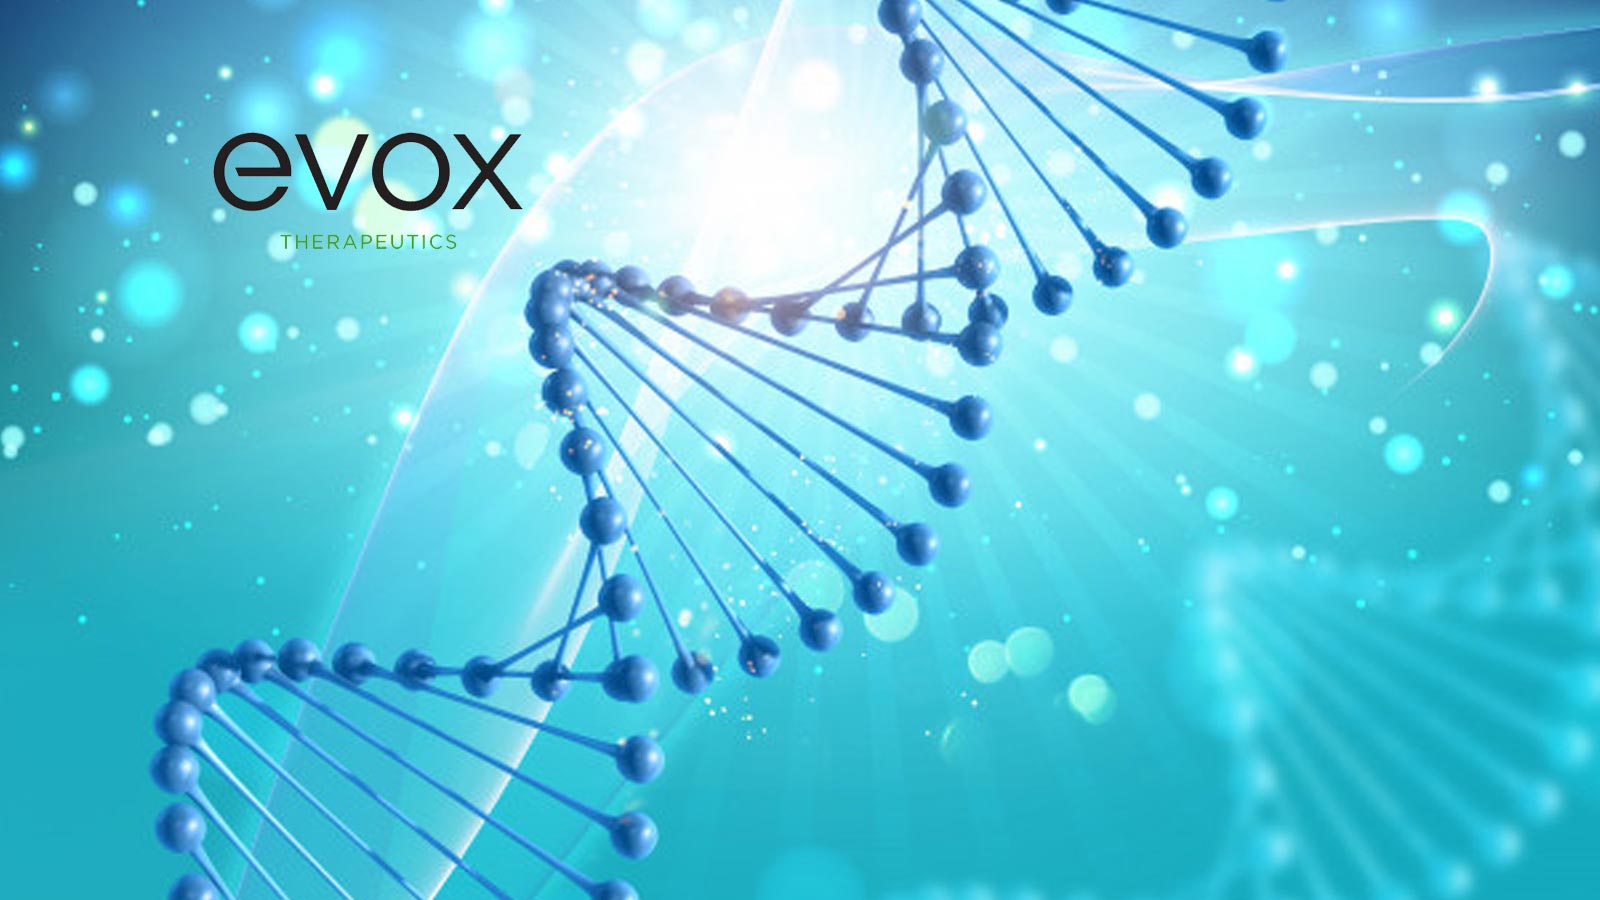 Evox Therapeutics βιοτεχνολογία φάρμακα: “Ρίχνει” 95 εκατ. ευρώ για κλινικές δοκιμές